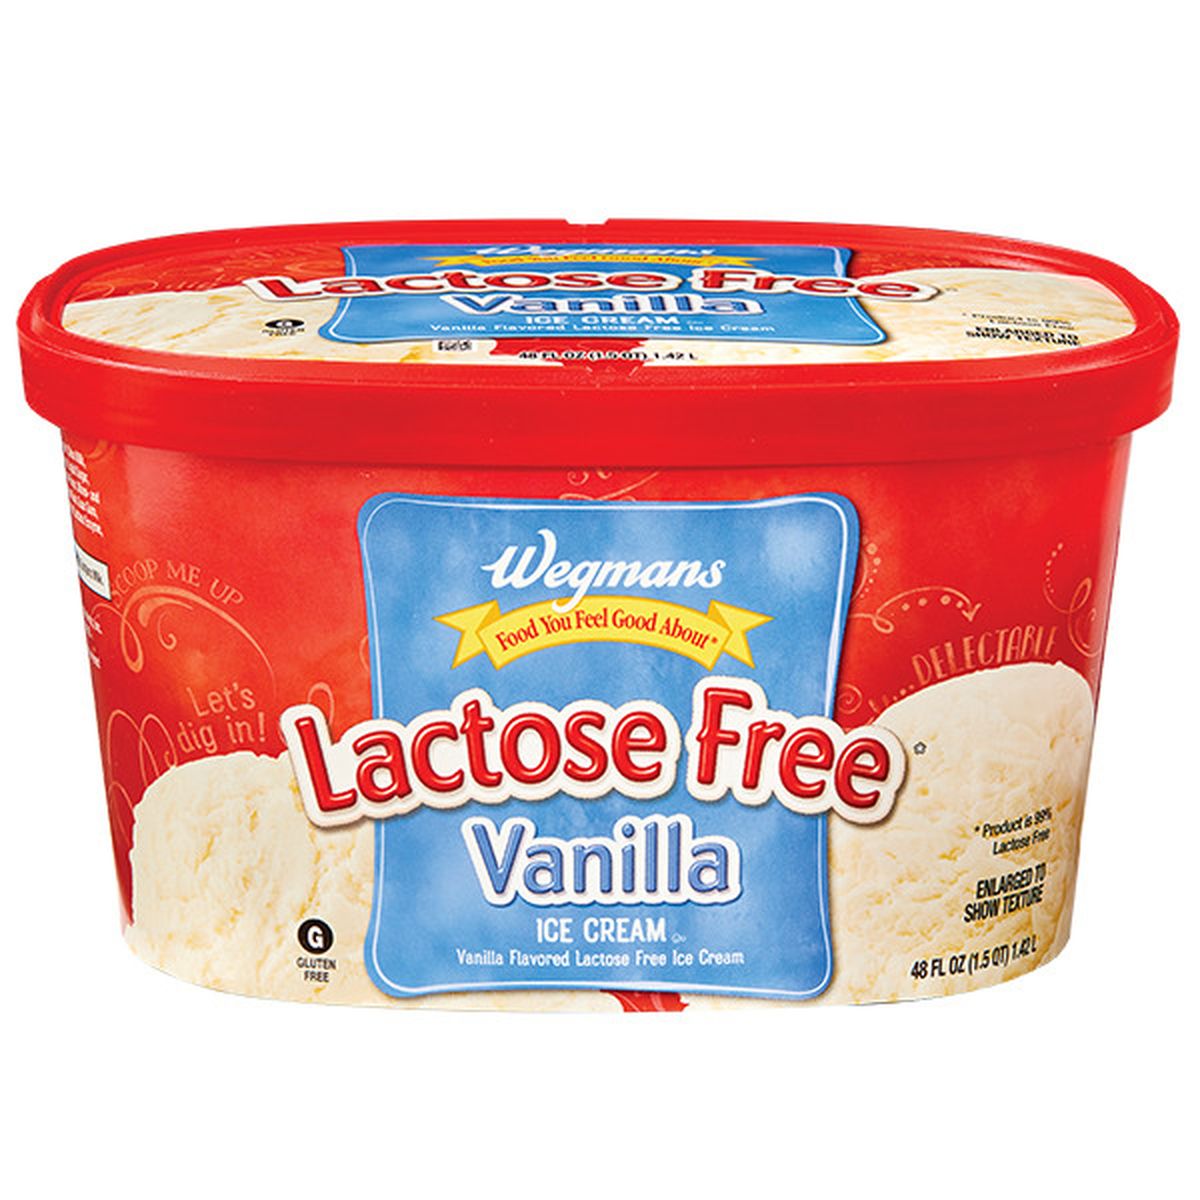 Calories in Wegmans Lactose Free* Vanilla Ice Cream